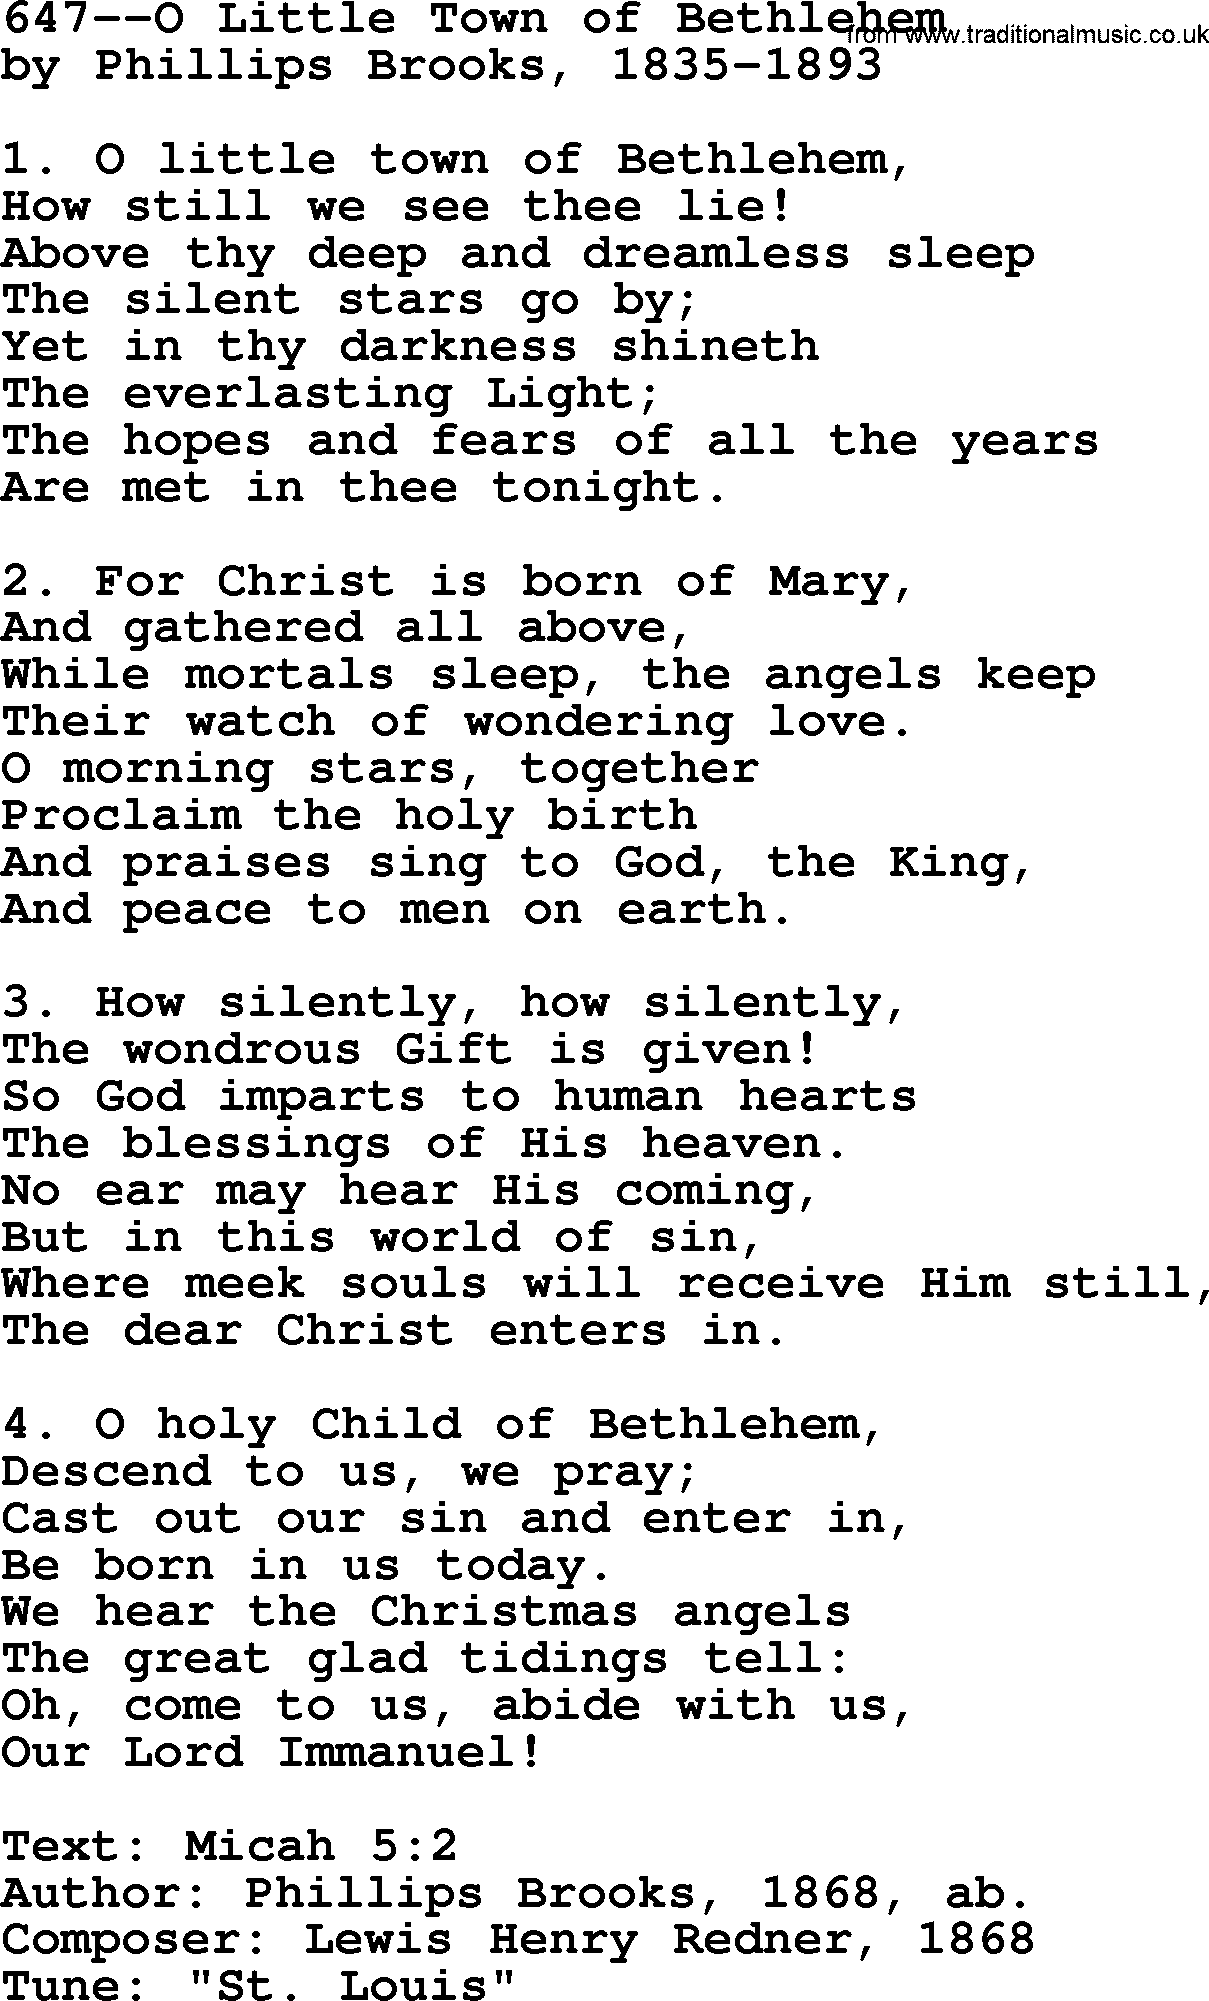 Lutheran Hymn: 647--O Little Town of Bethlehem.txt lyrics with PDF